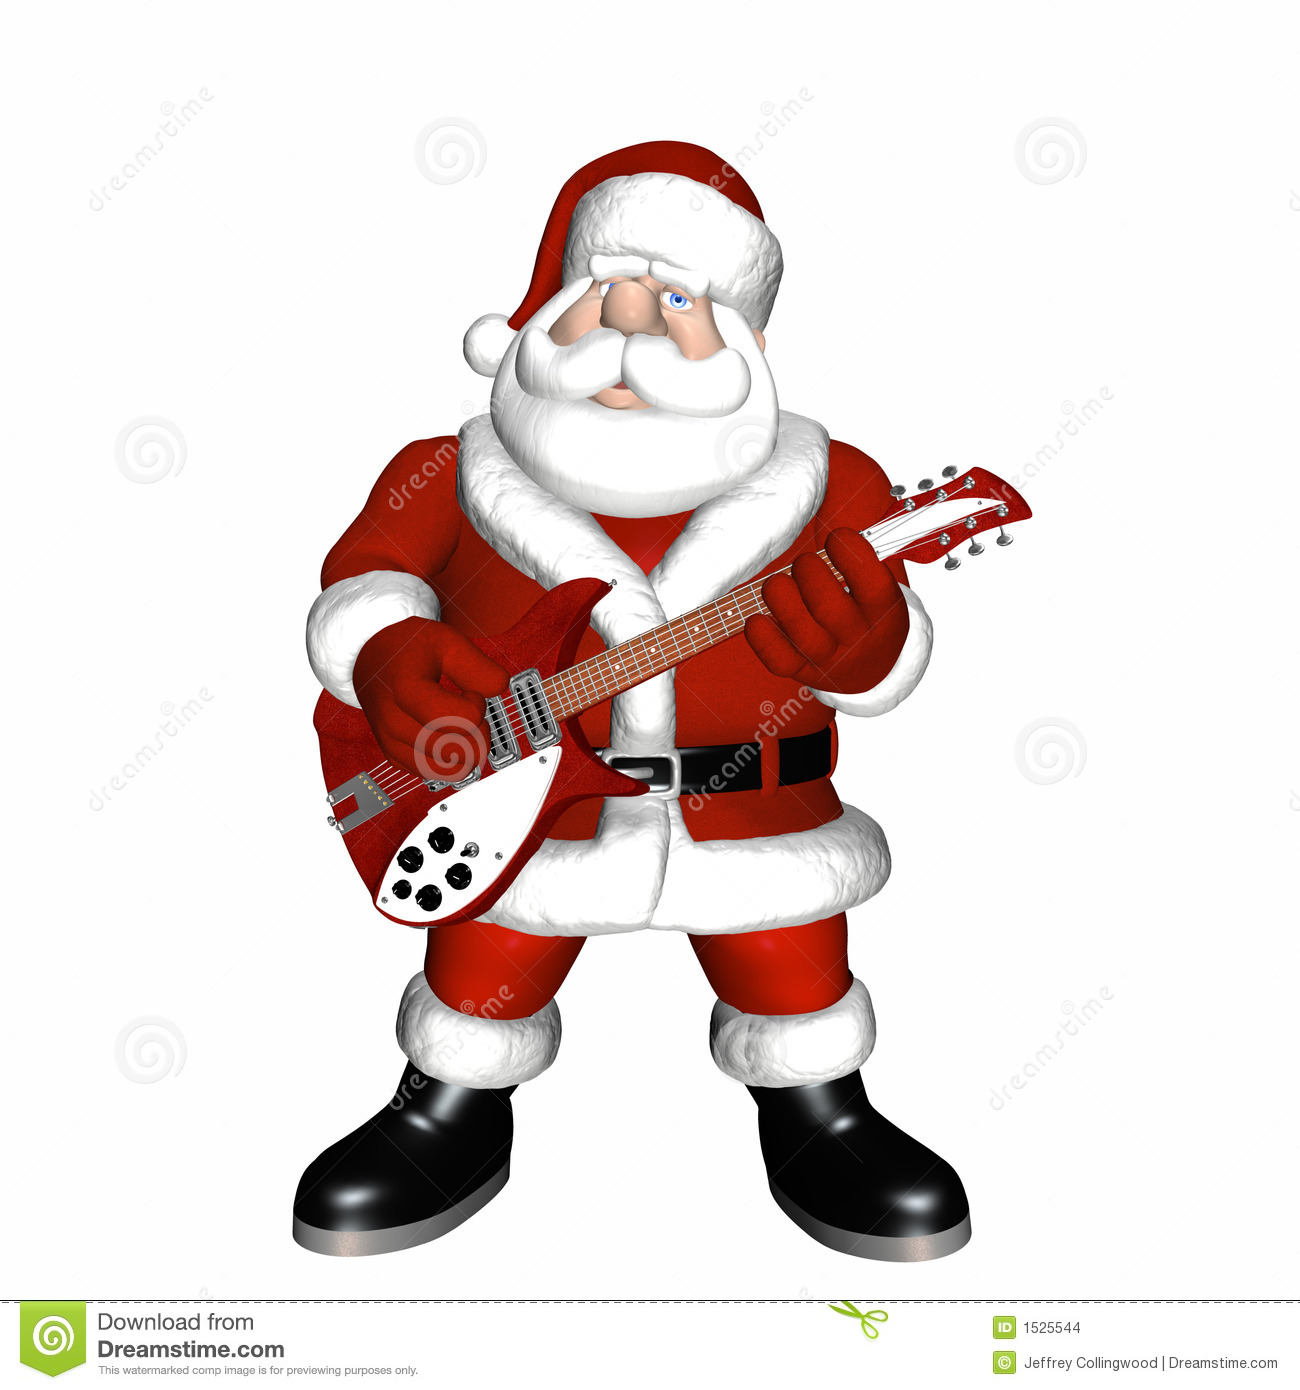 More Similar Stock Images Of   Santa Playing A Guitar 1